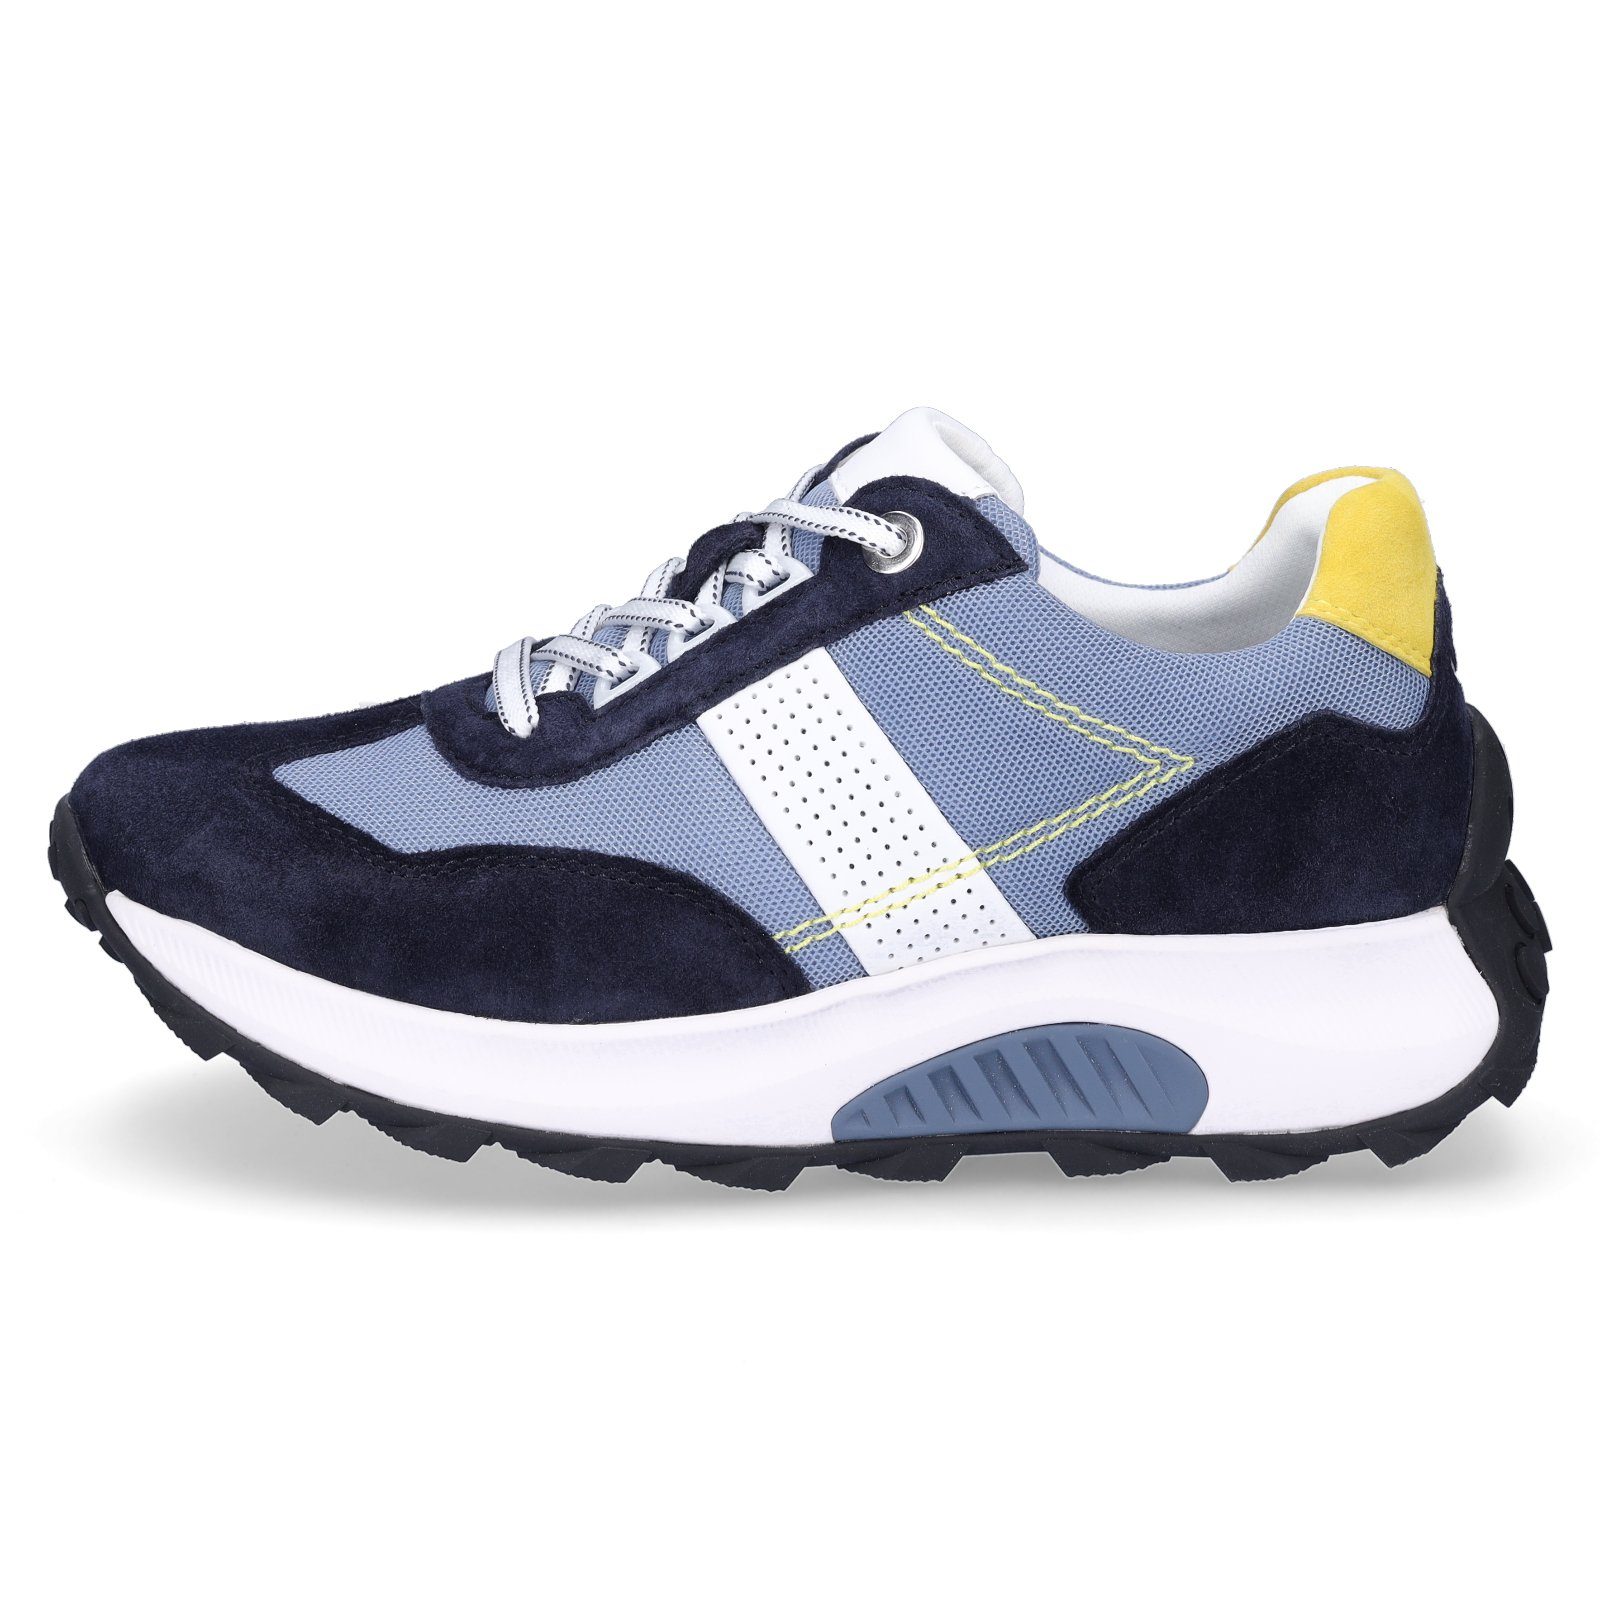 Gabor Gabor Damen Sneaker Mehrfarbig blau / 36) (marine/azur/white/yellow Sneaker